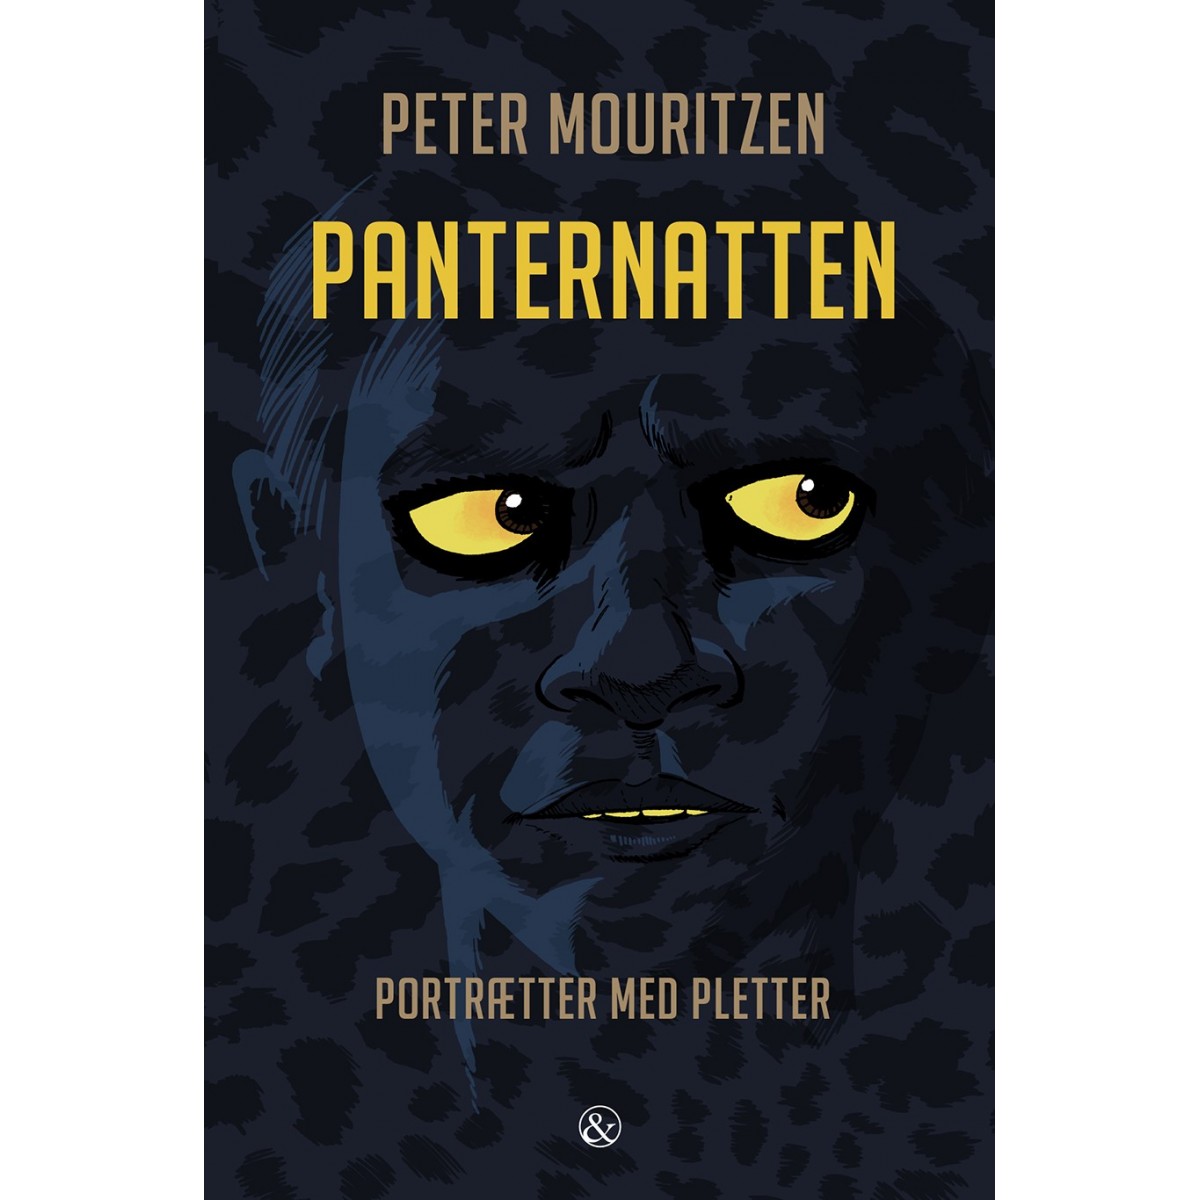 UDKOMMER D. 22.11. KAN FORUDBESTILLES - Peter Mouritzen: Panternatten